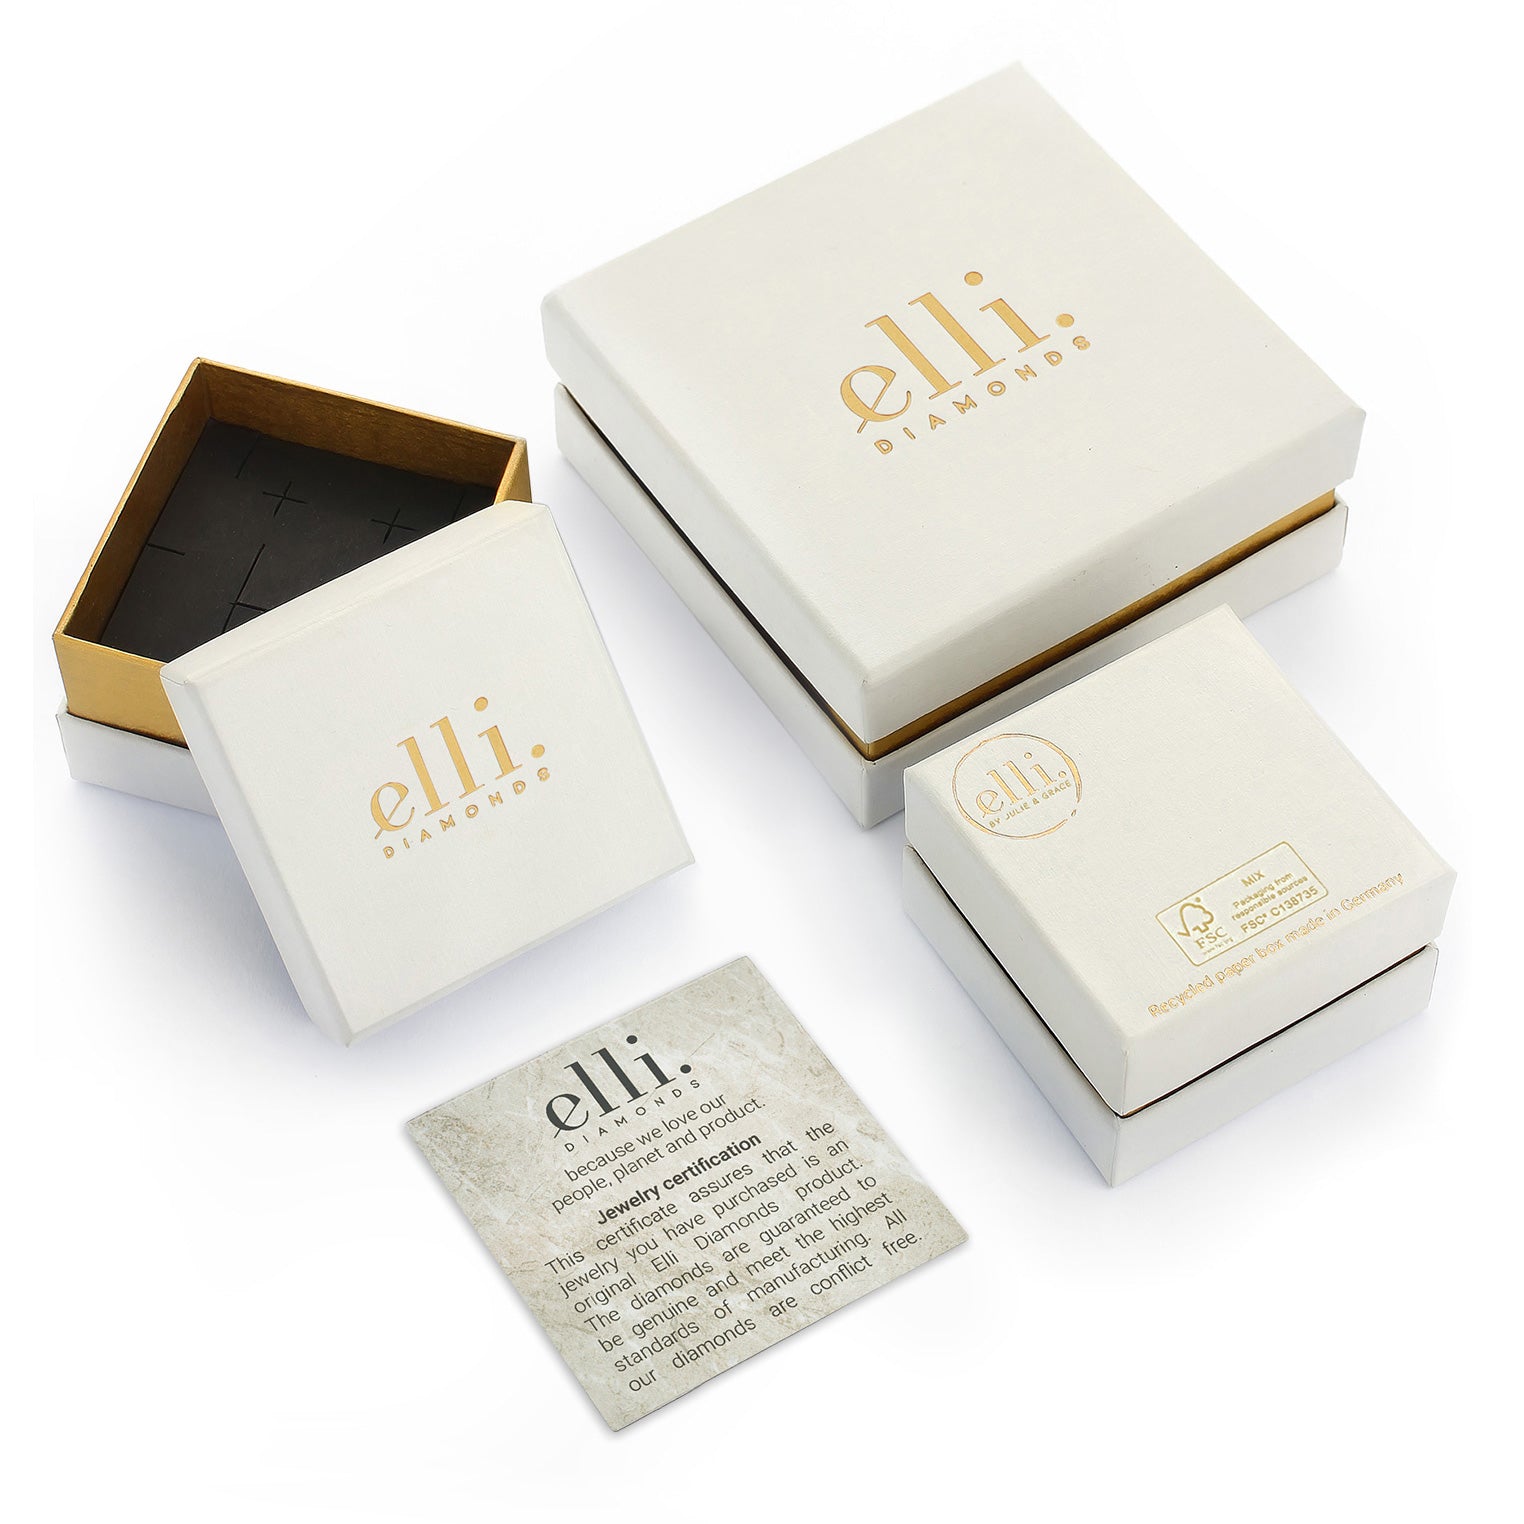 Gold - Elli DIAMONDS | Verlobungsring | Diamant ( Weiß, 0,16 ct ) | 925 Sterling Silber vergoldet